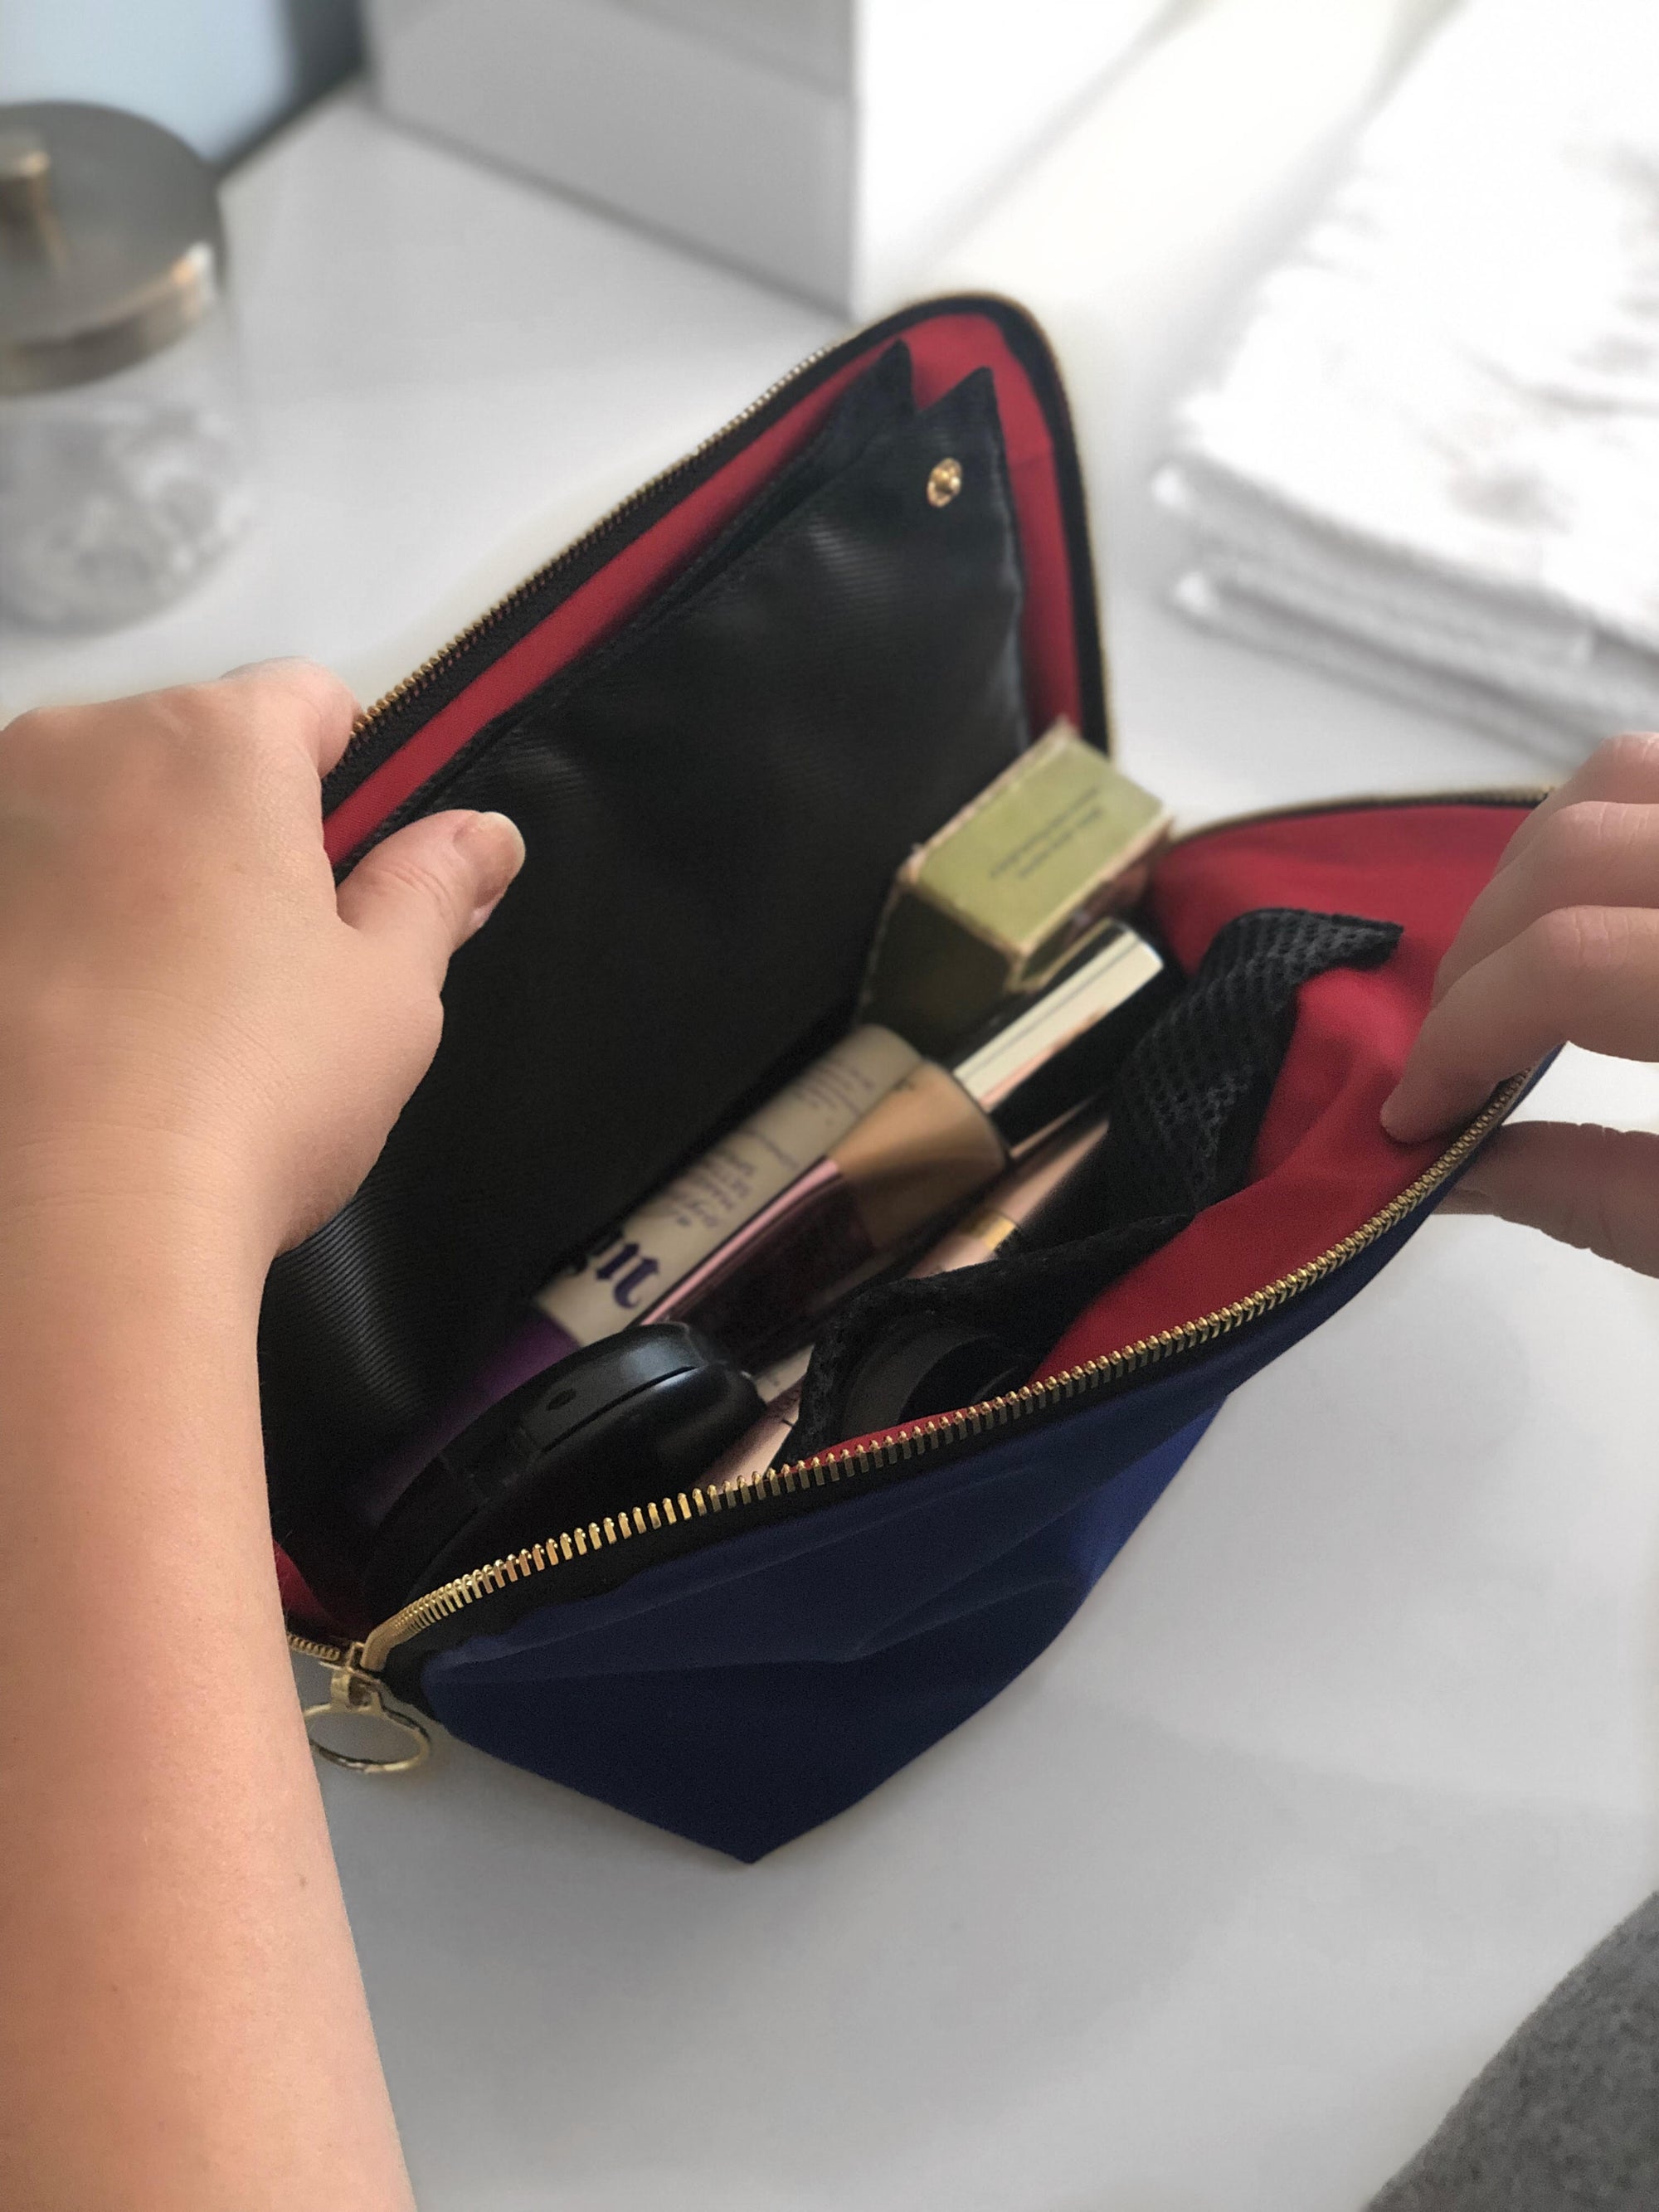 A Professional's Organized Makeup Bag